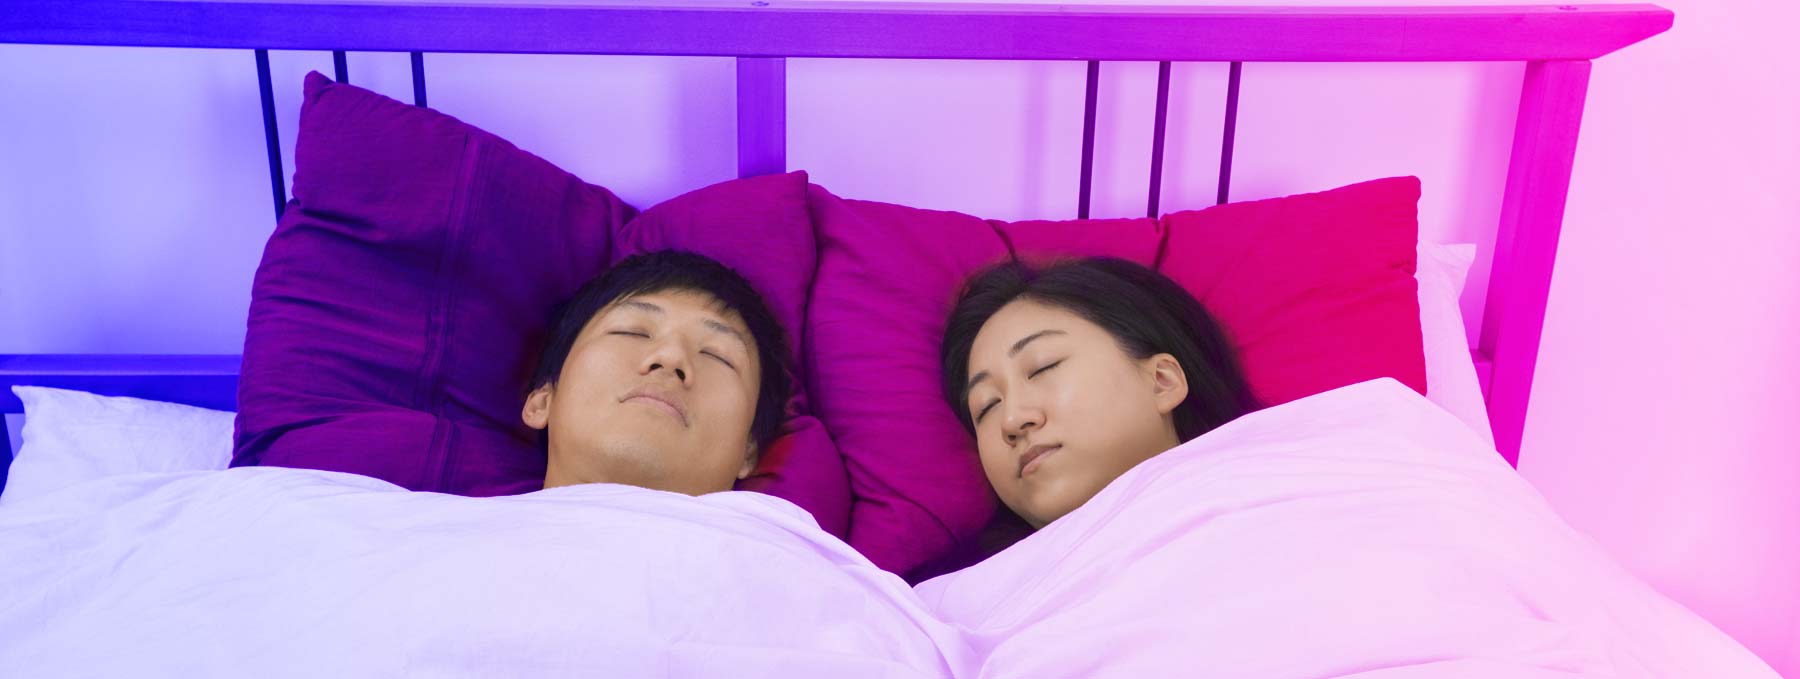 Sleep Disturbances Men Vs Women